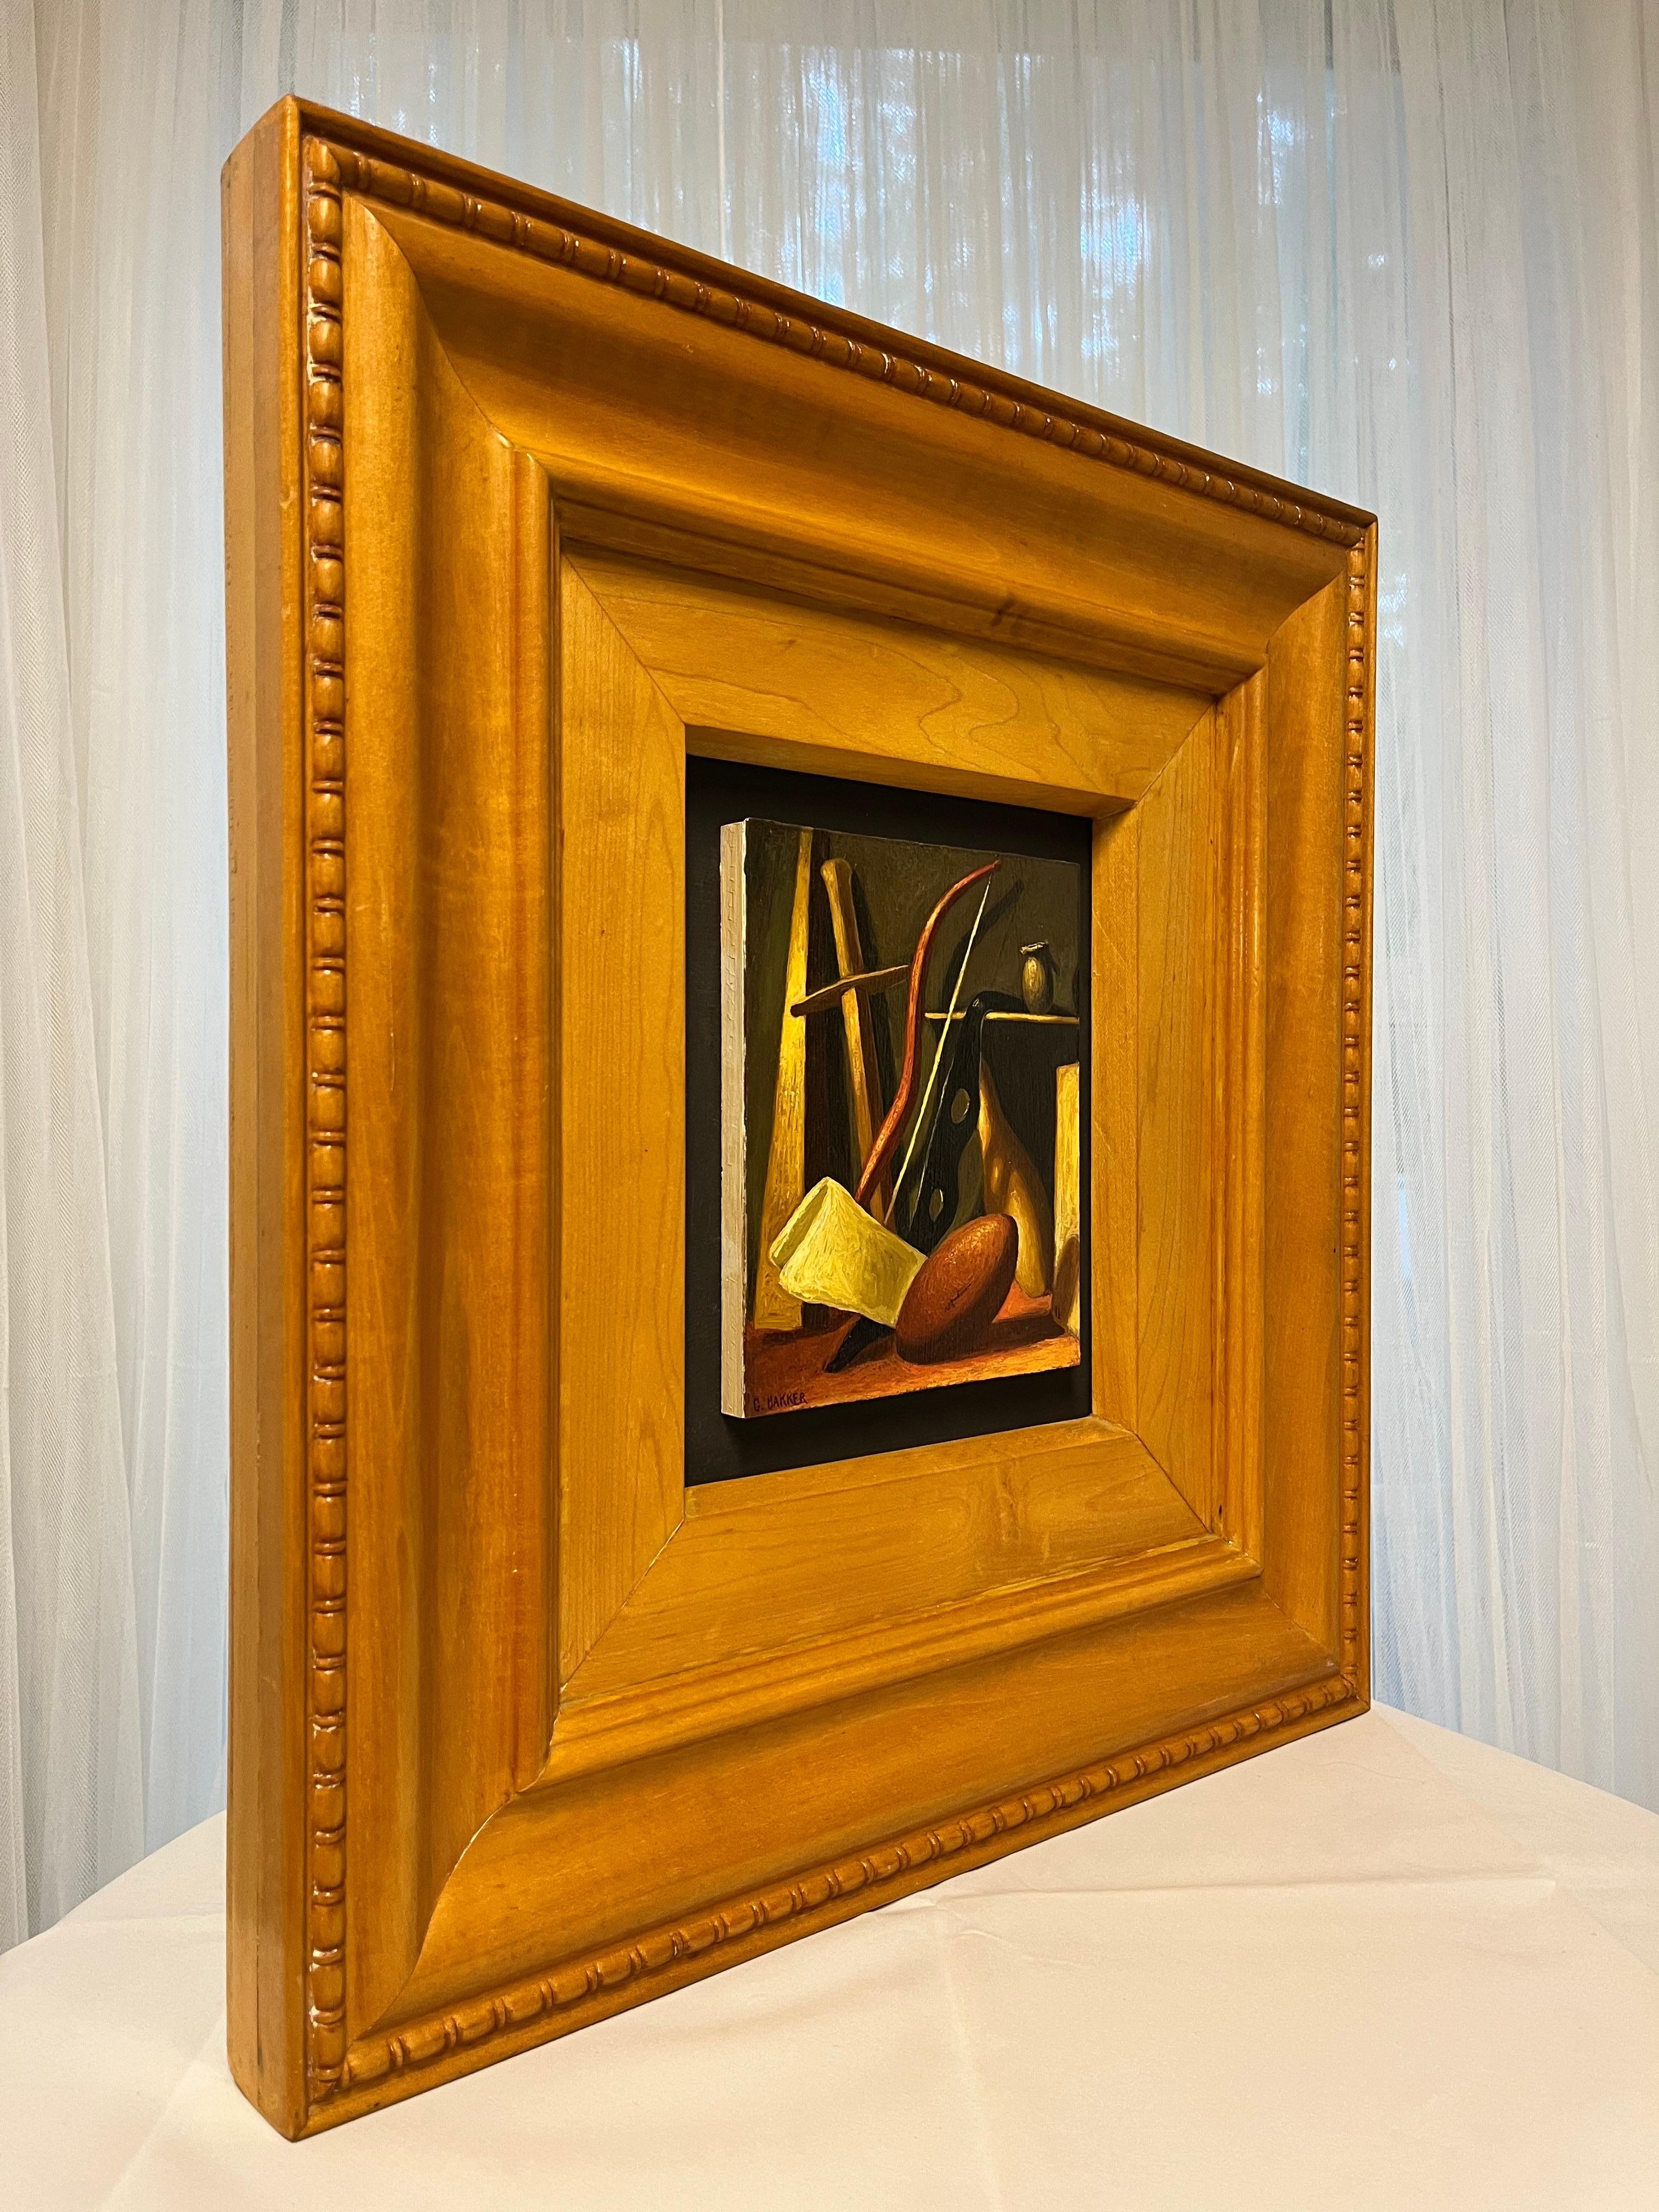 American Classical Gabrielle Bakker 1990 Boys Still Life Painting Gallery Provenance Custom Frame For Sale